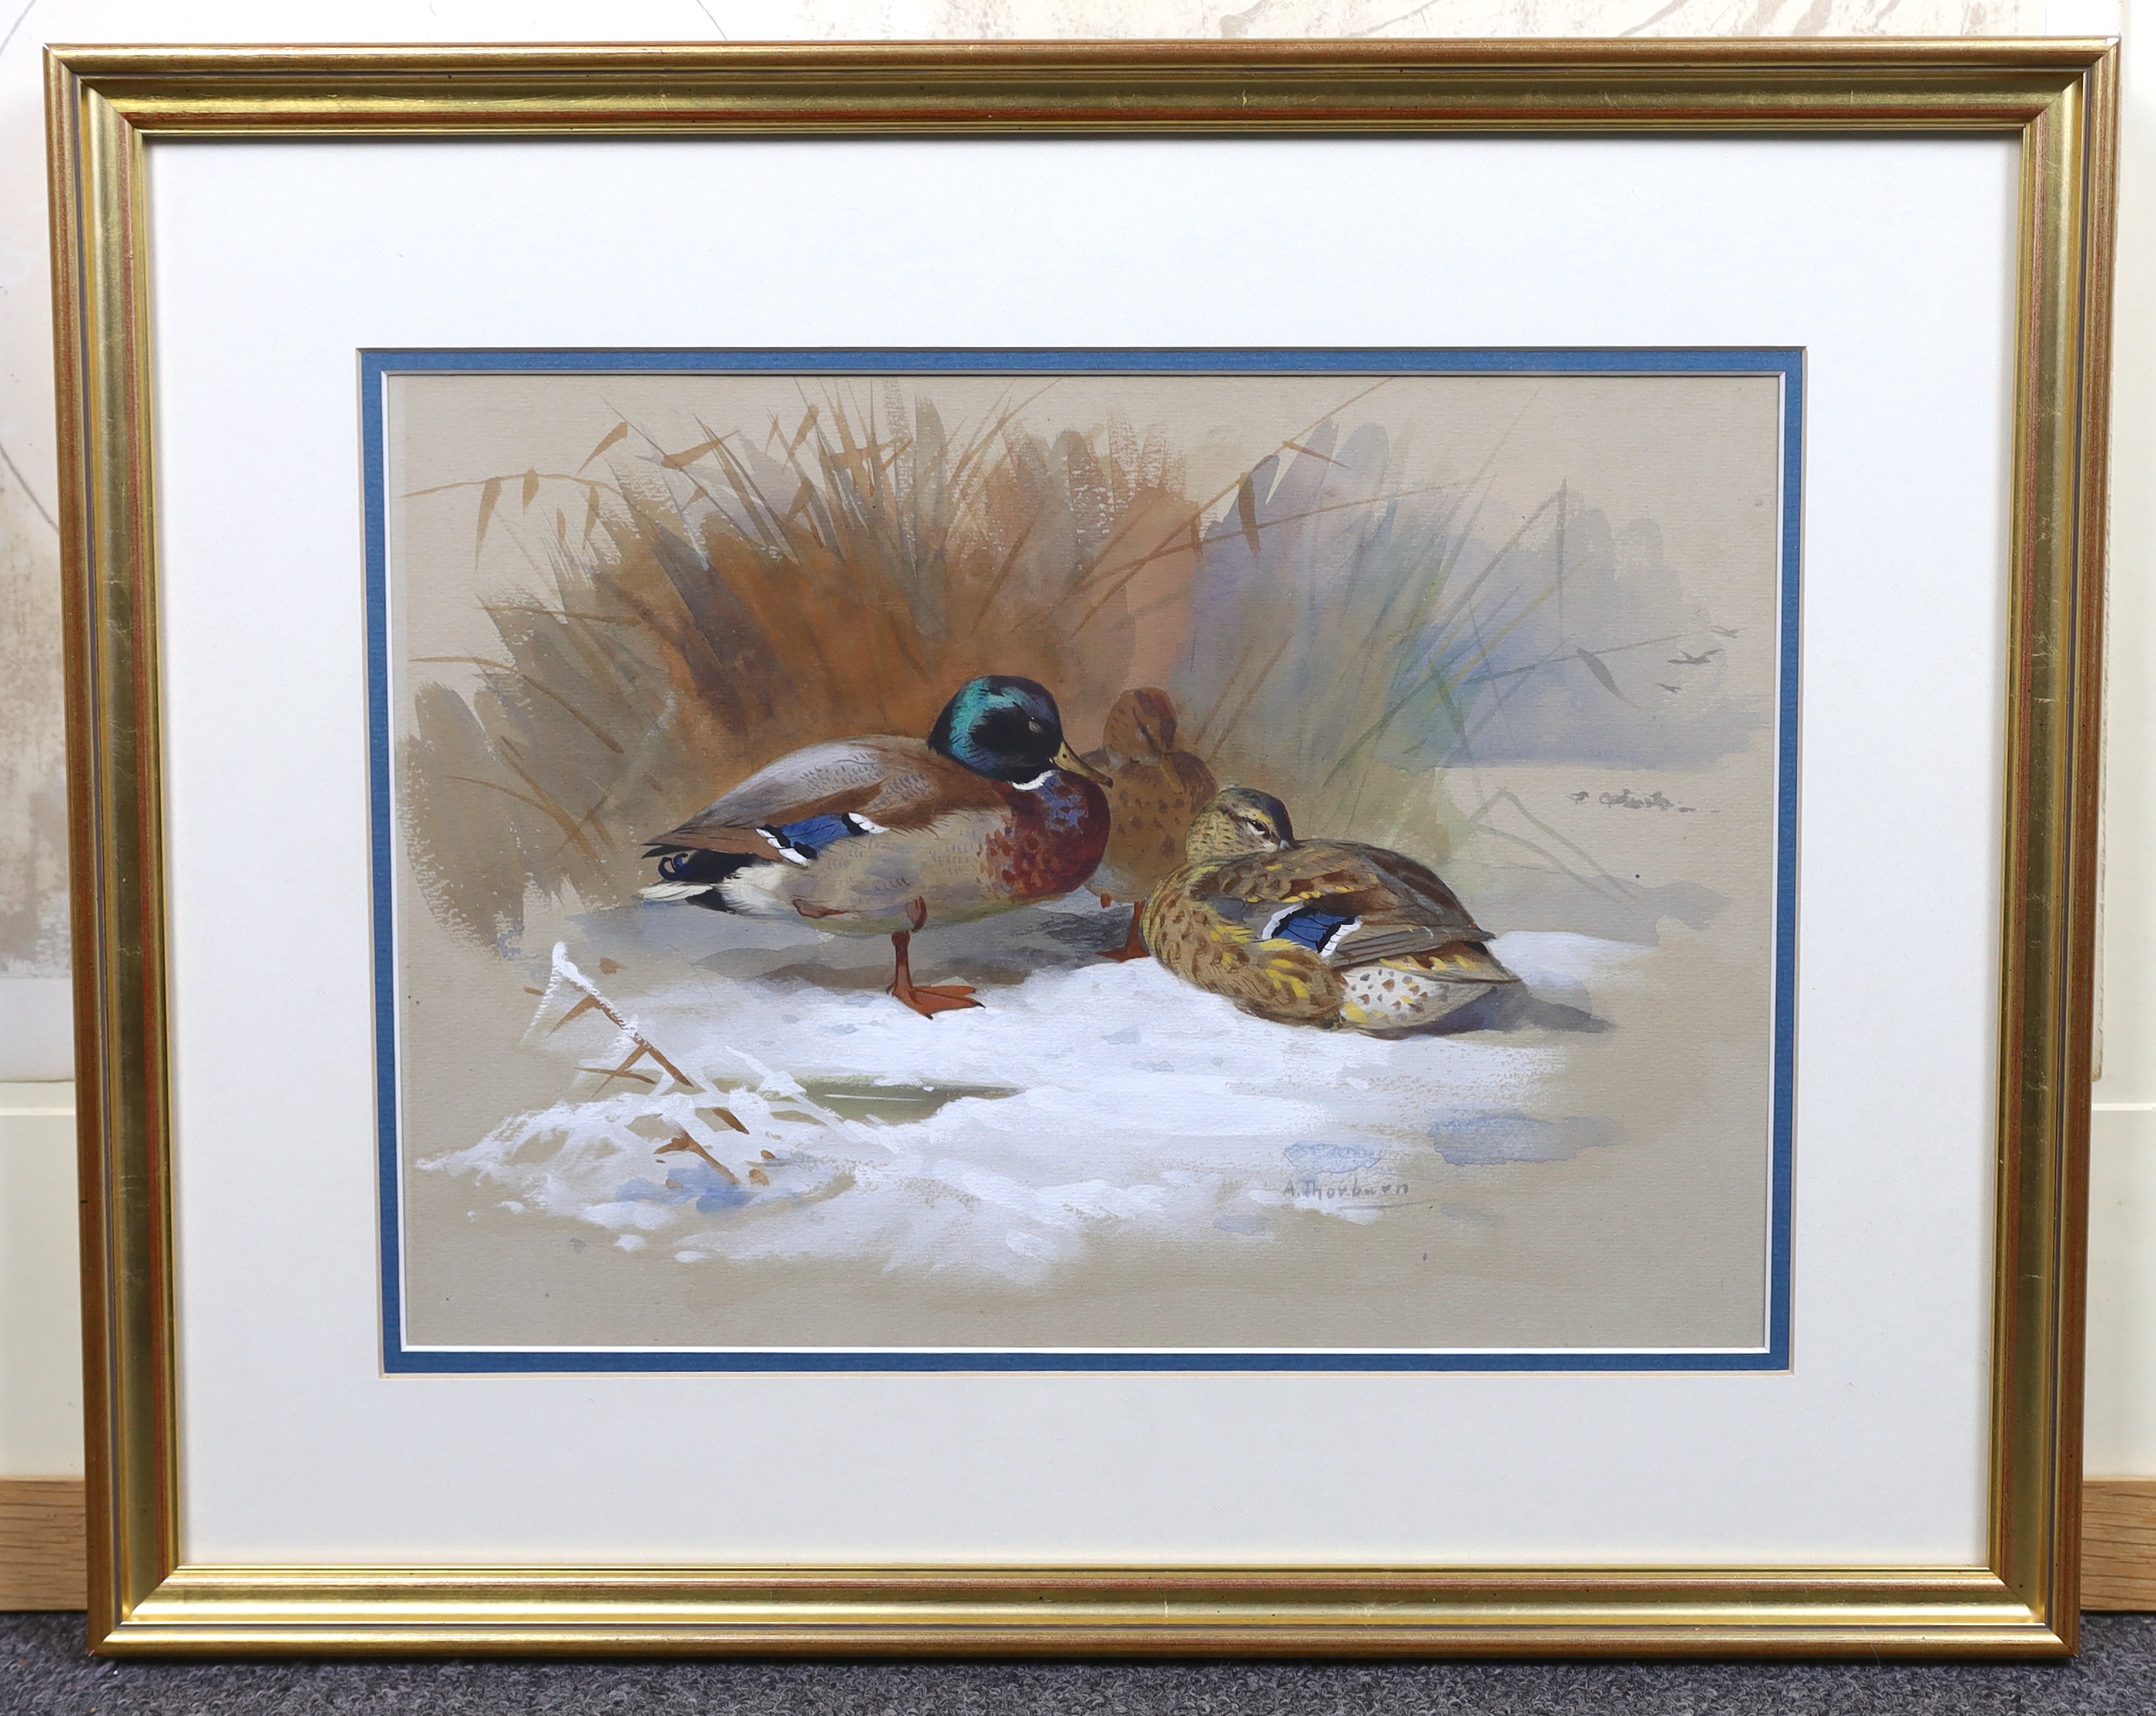 Archibald Thorburn (British, (1860-1935), Mallard in winter, gouache and watercolour, 24 x 34cm